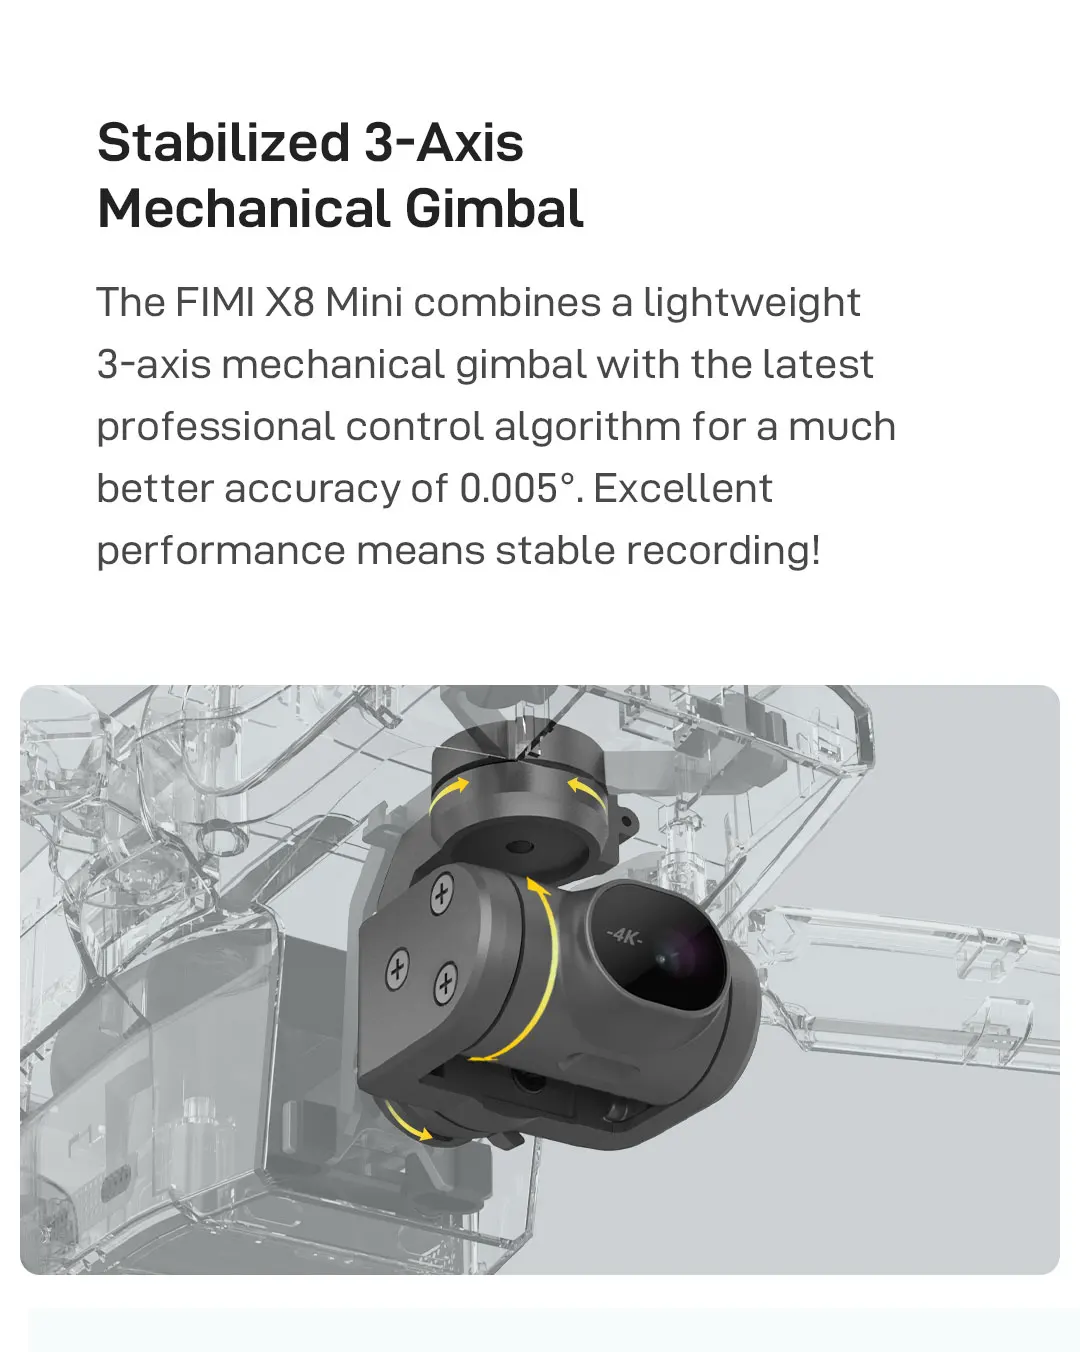 FIMI X8 mini Pro Camera Drone, FIMI X8 Mini combines lightweight 3-axis mechanical gimbal with